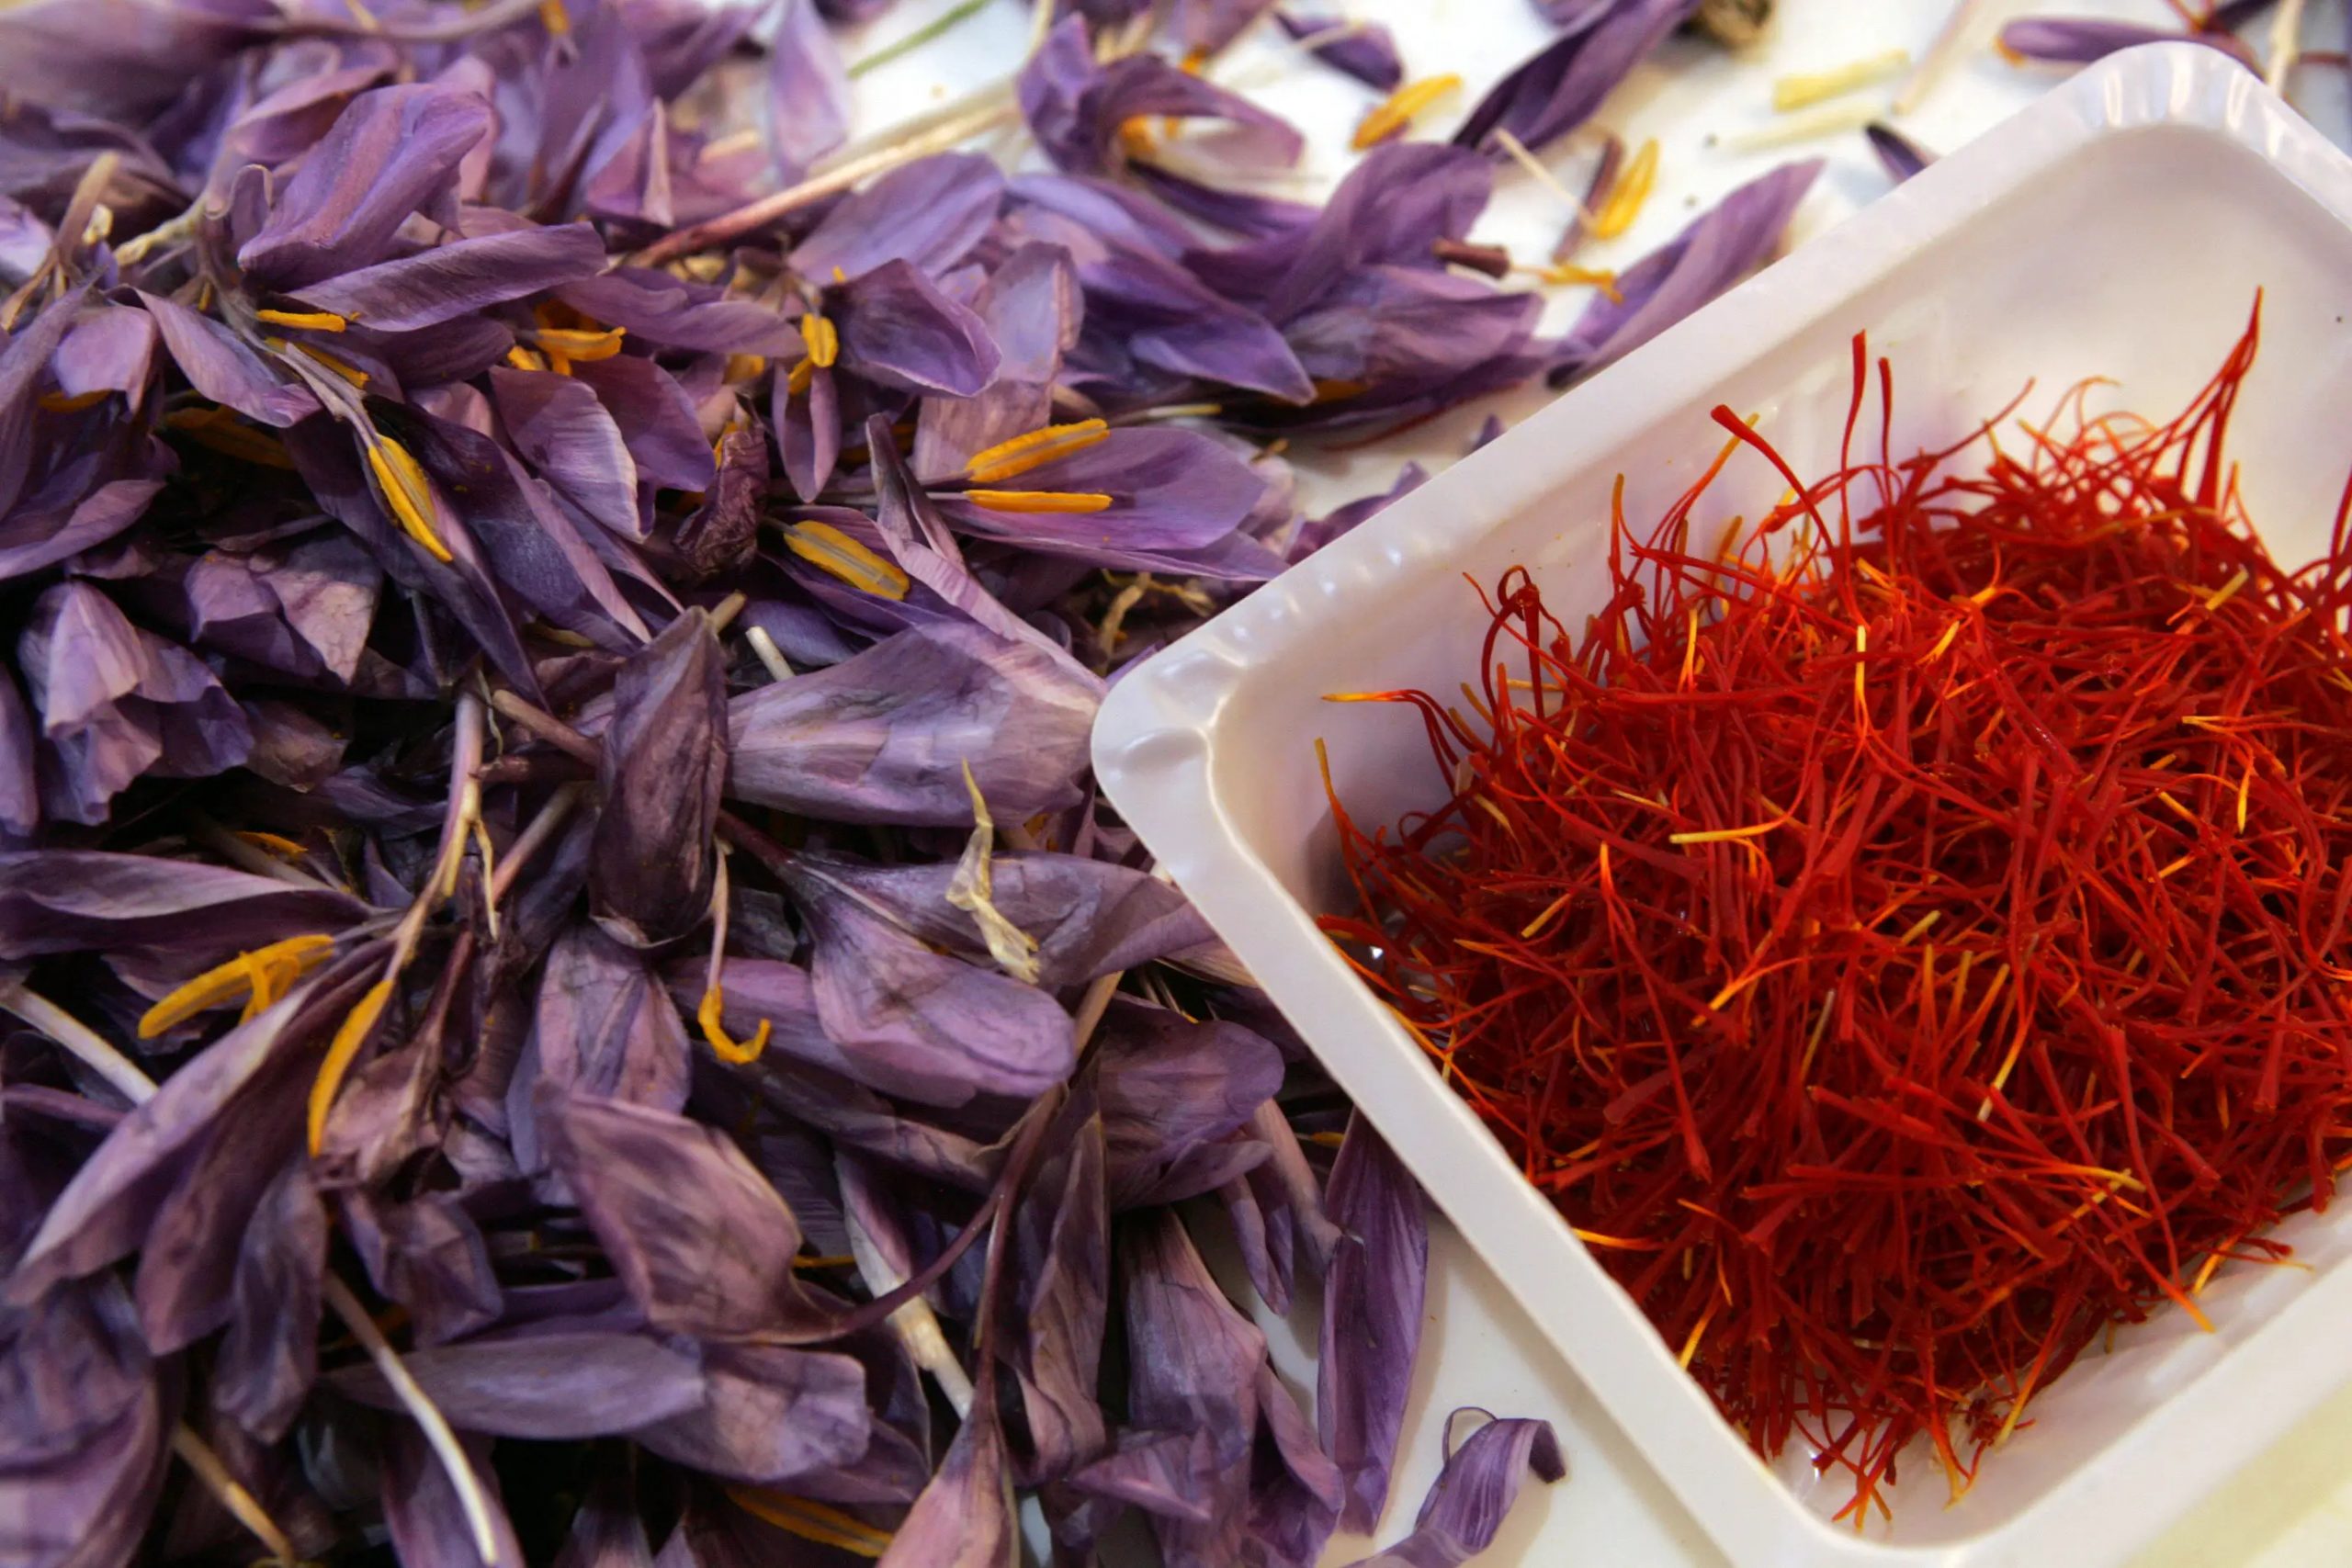 Common Mistakes to Avoid When Buying Saffron in Bulk